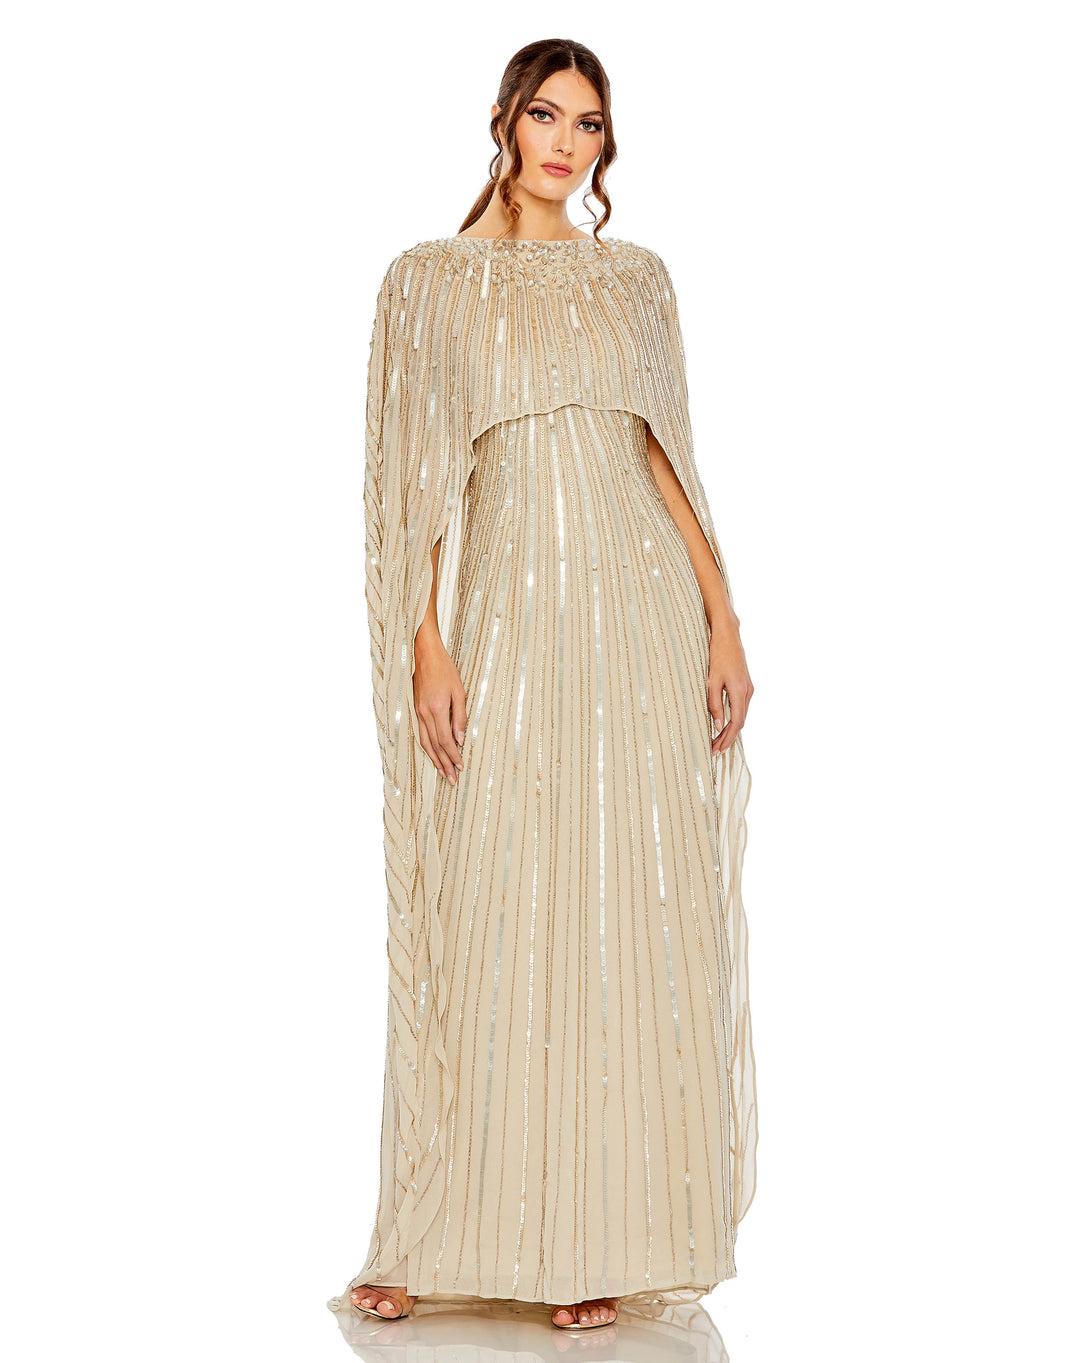 Embellished Column Cape Dress – Mac Duggal